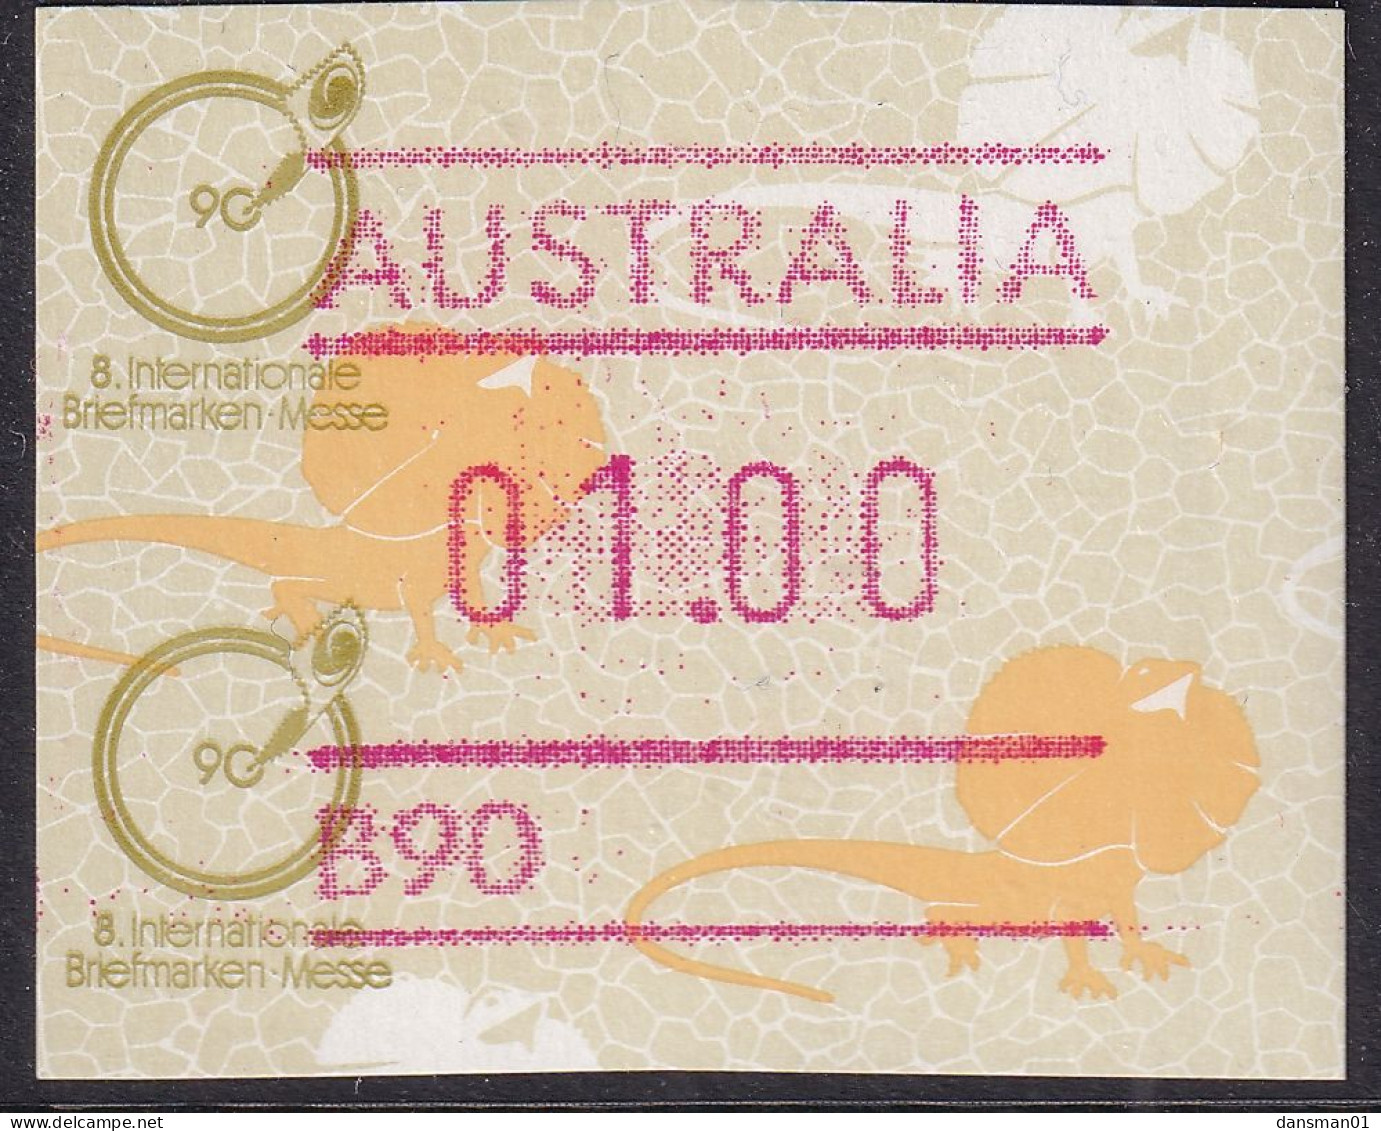 Australia 1989 Frama "INTERNATIONAL BRIEFMARKEN MESSE" MNH - Mint Stamps